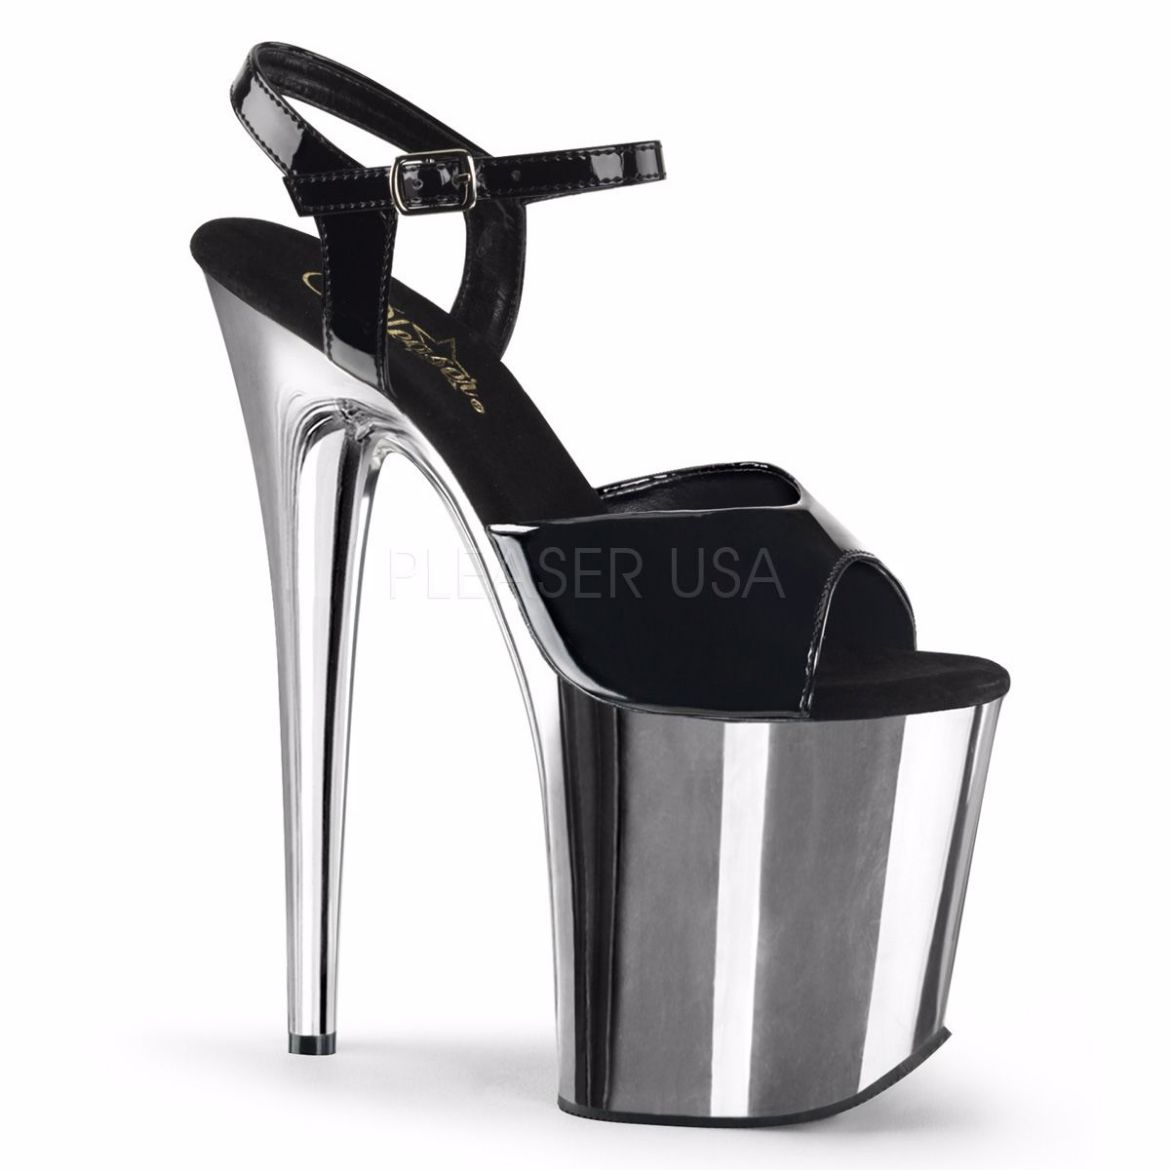 Product image of Pleaser Flamingo-809 Black Patent/Silver Chrome, 8 inch (20.3 cm) Heel, 4 inch (10.2 cm) Platform Sandal Shoes